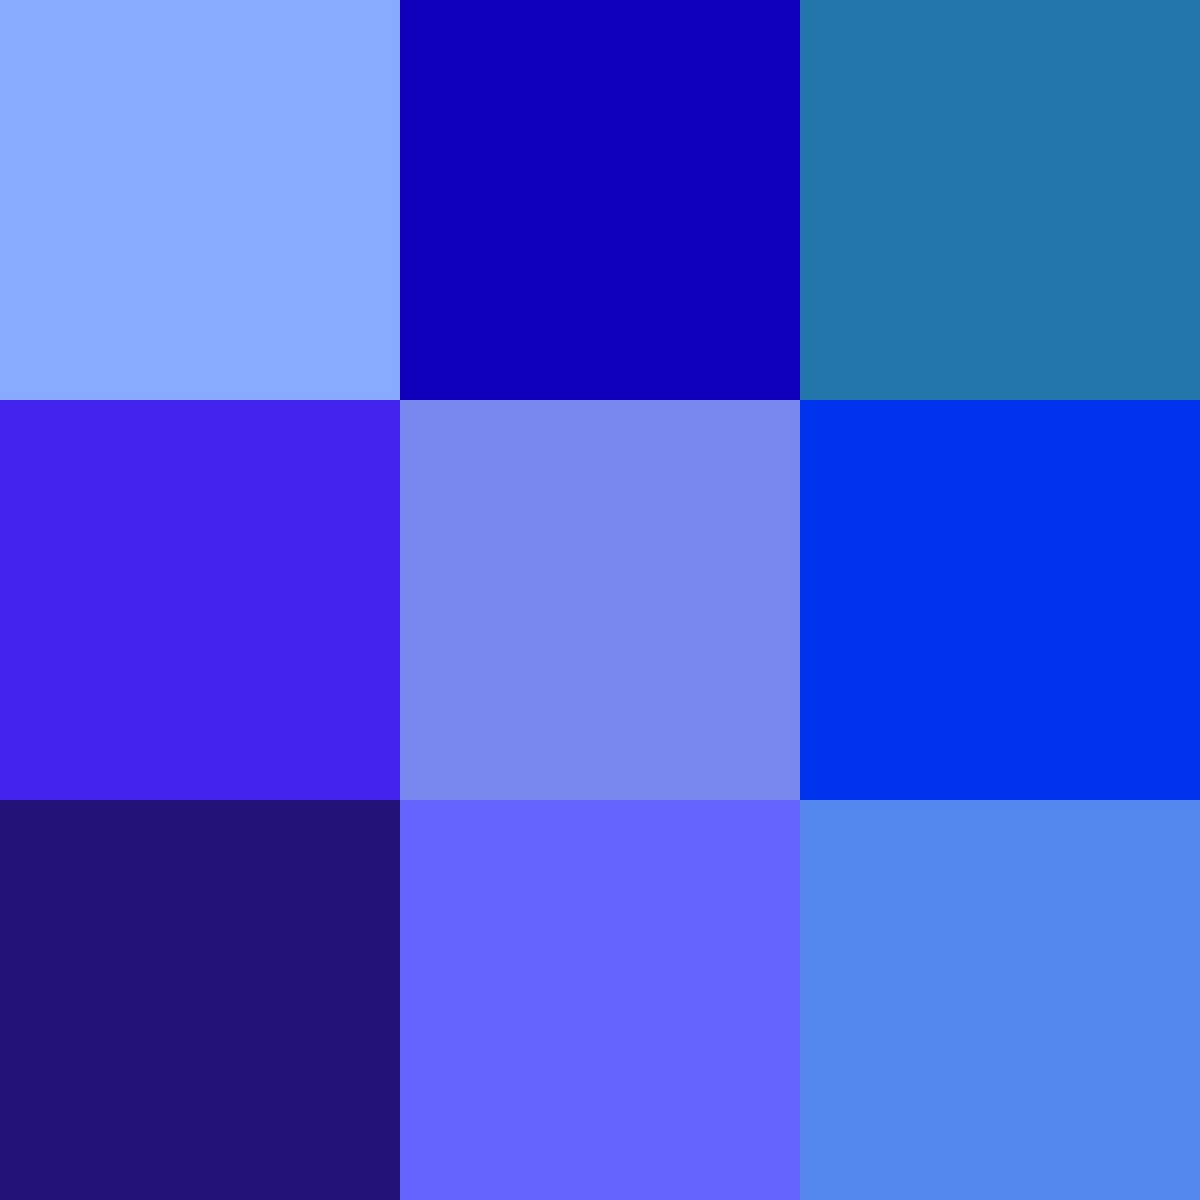 NUMEROLOGY COLORS -
COLOR CODES AND GEMATRIA
(PART 17 - BLUES) 🟦

Blue = 4 - # 0000FF

MediumBlue = 6 - # 0000CD

DarkBlue = 11 - # 00008B

Navy = 8 - # 000080

MidnightBlue = 7 - # 191970

DodgerBlue = 3 - # 1E90FF

CornflowerBlue = 7 - # 6495ED

LightBlue = 6 - # ADD8E6